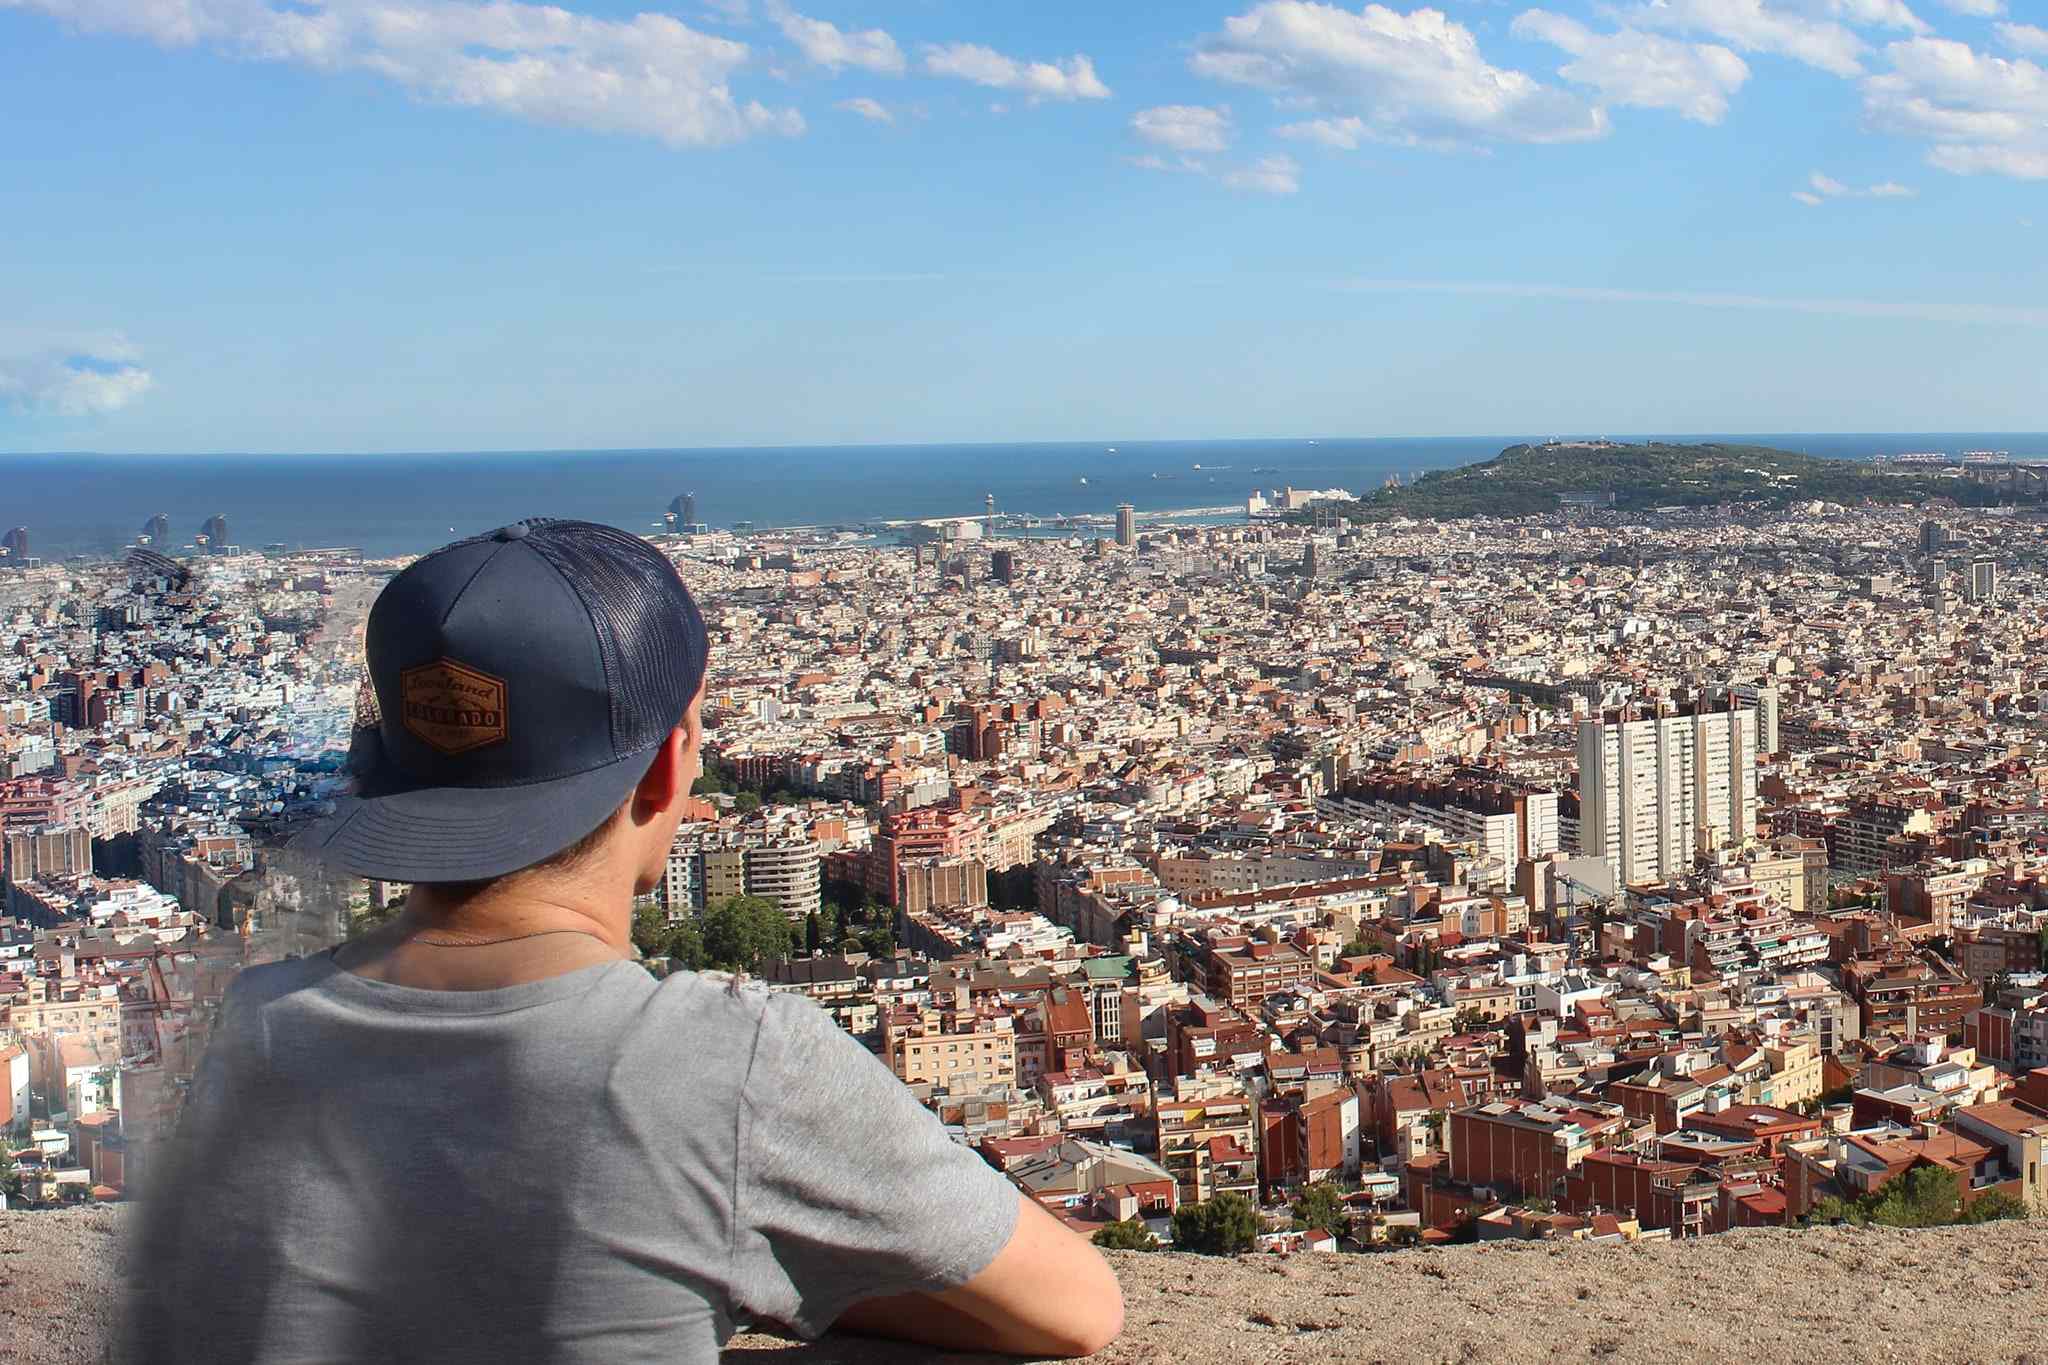 Student overlooking a coastal city